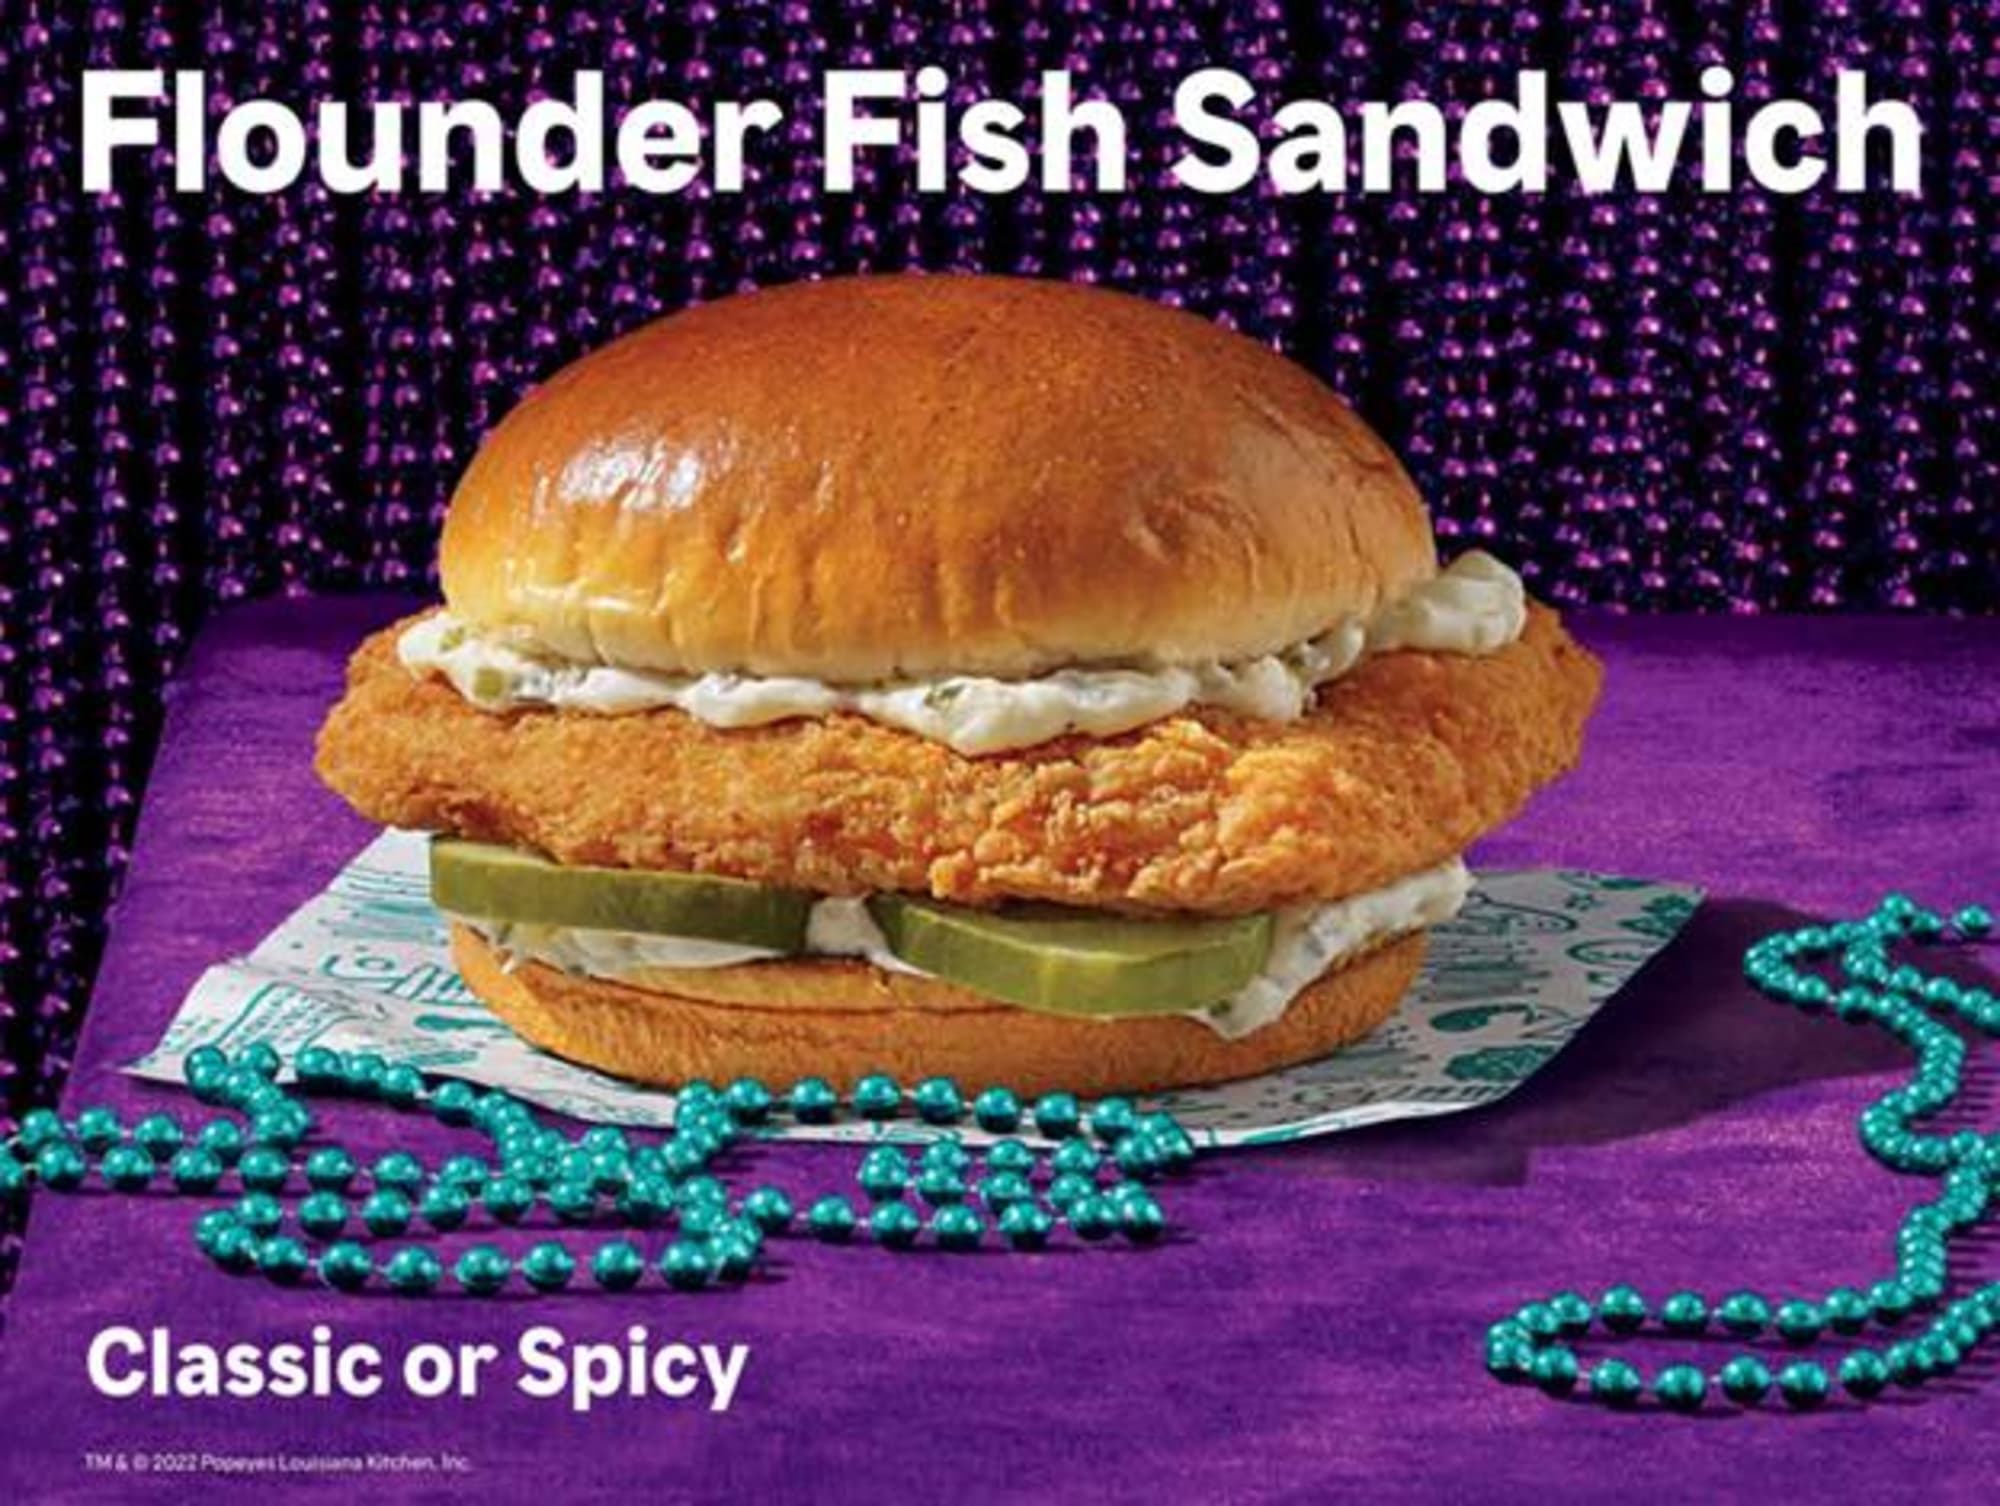 popeyes-flounder-fish-sandwich-gets-a-flavor-upgrade